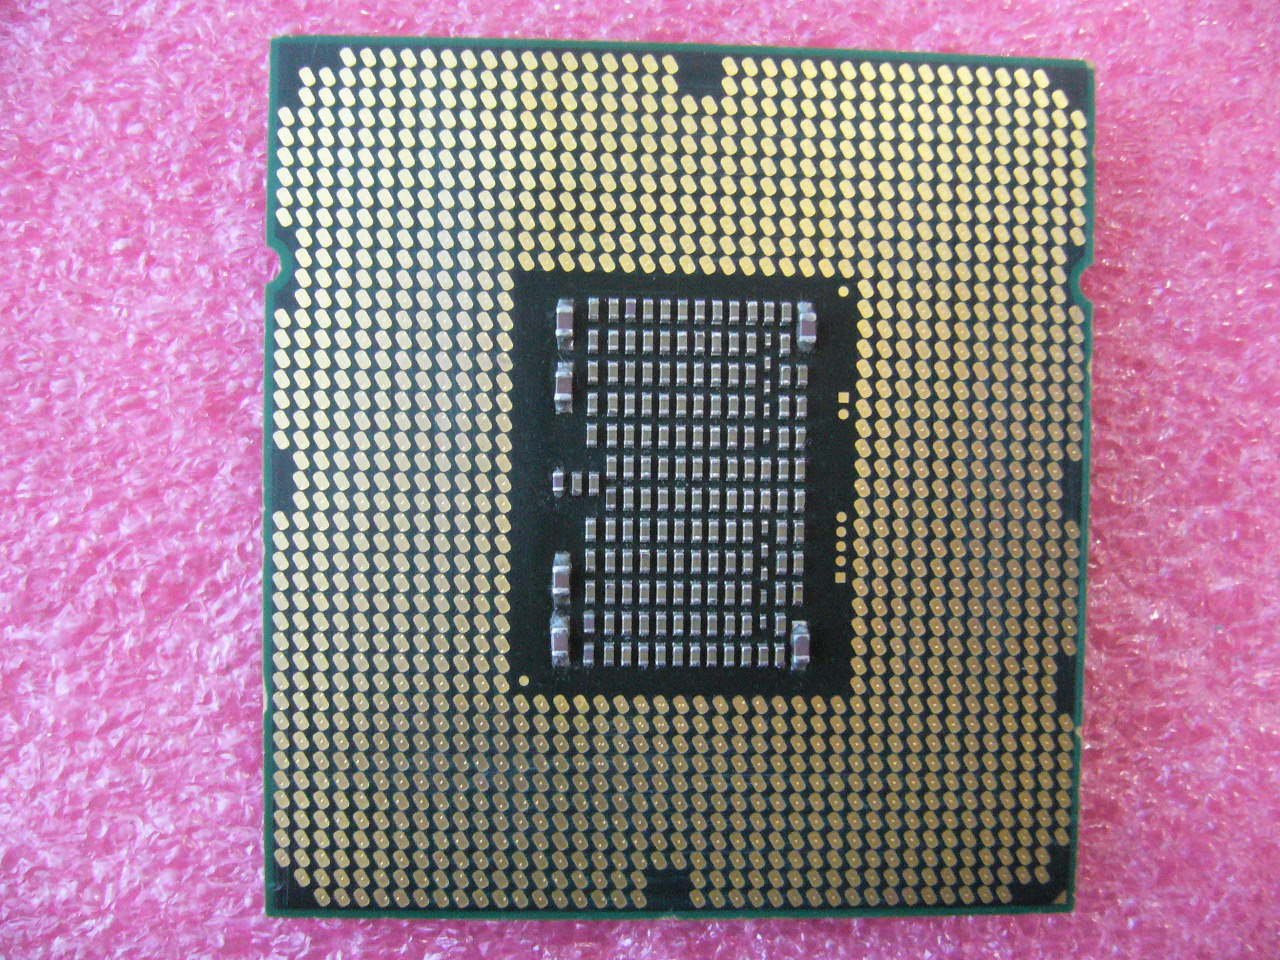 QTY 1x INTEL Six-Cores Xeon CPU E5649 2.53GHZ/12MB LGA1366 SLBZ8 - Click Image to Close